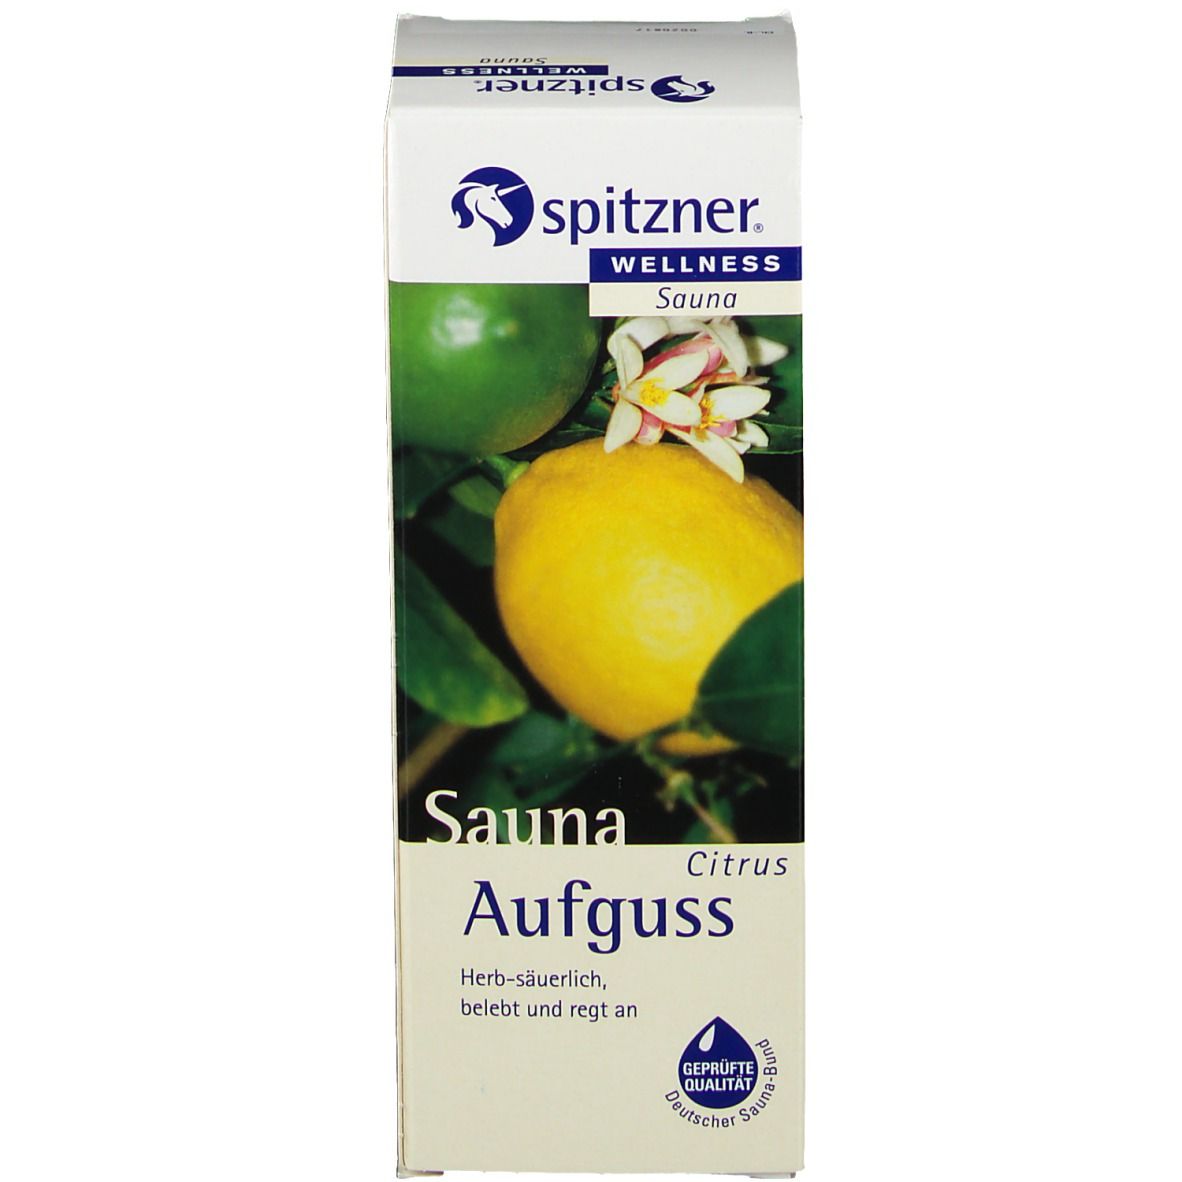 Spitzner® Wellness Saunaaufguss Citrus